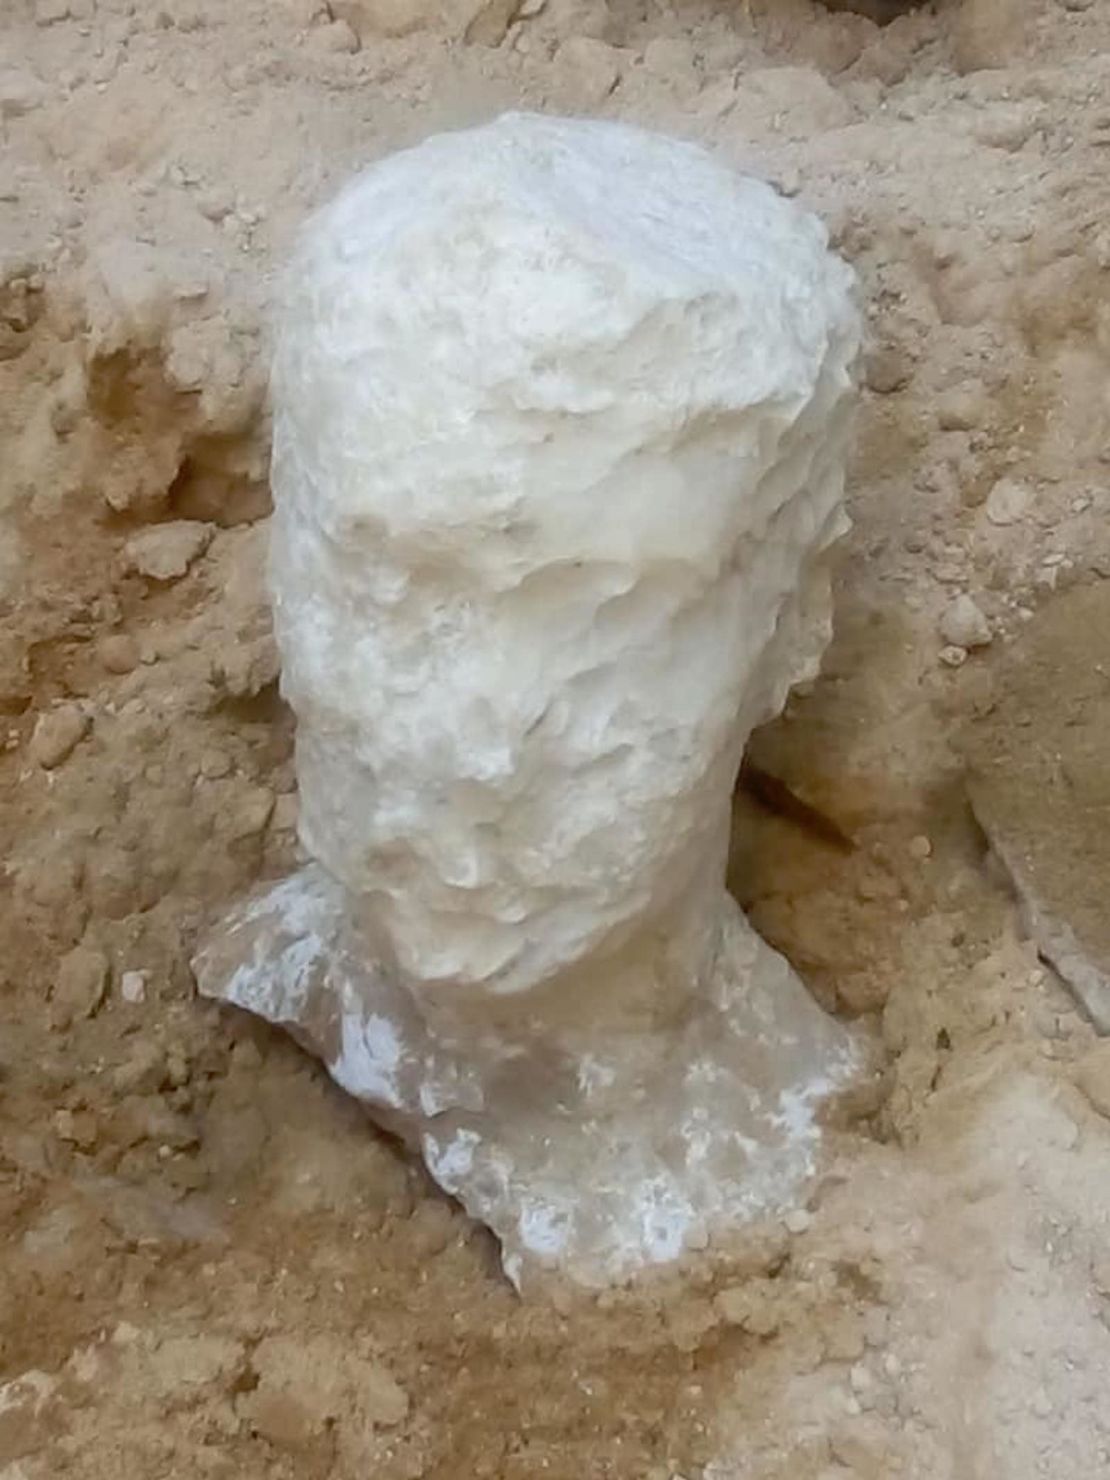 A worn alabaster bust was also found at the site. 